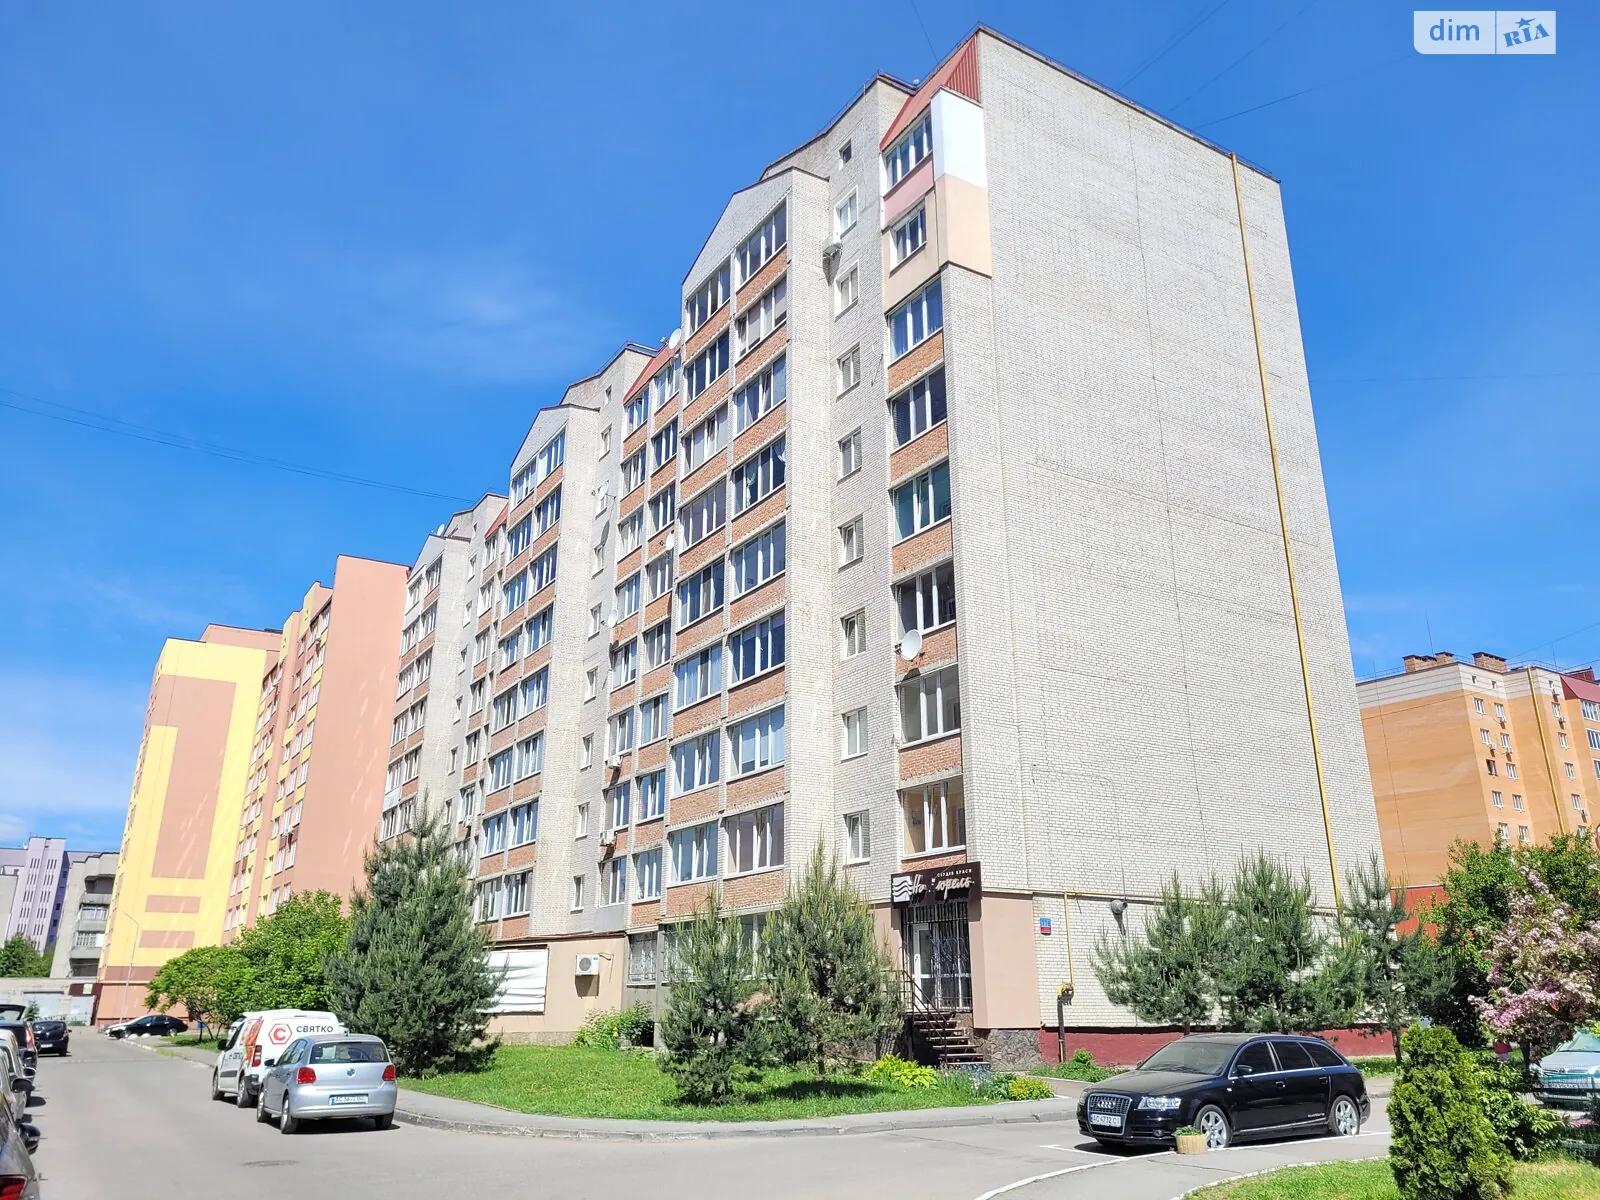 2-кімнатна квартира 72.2 кв. м у Луцьку, цена: 78000 $